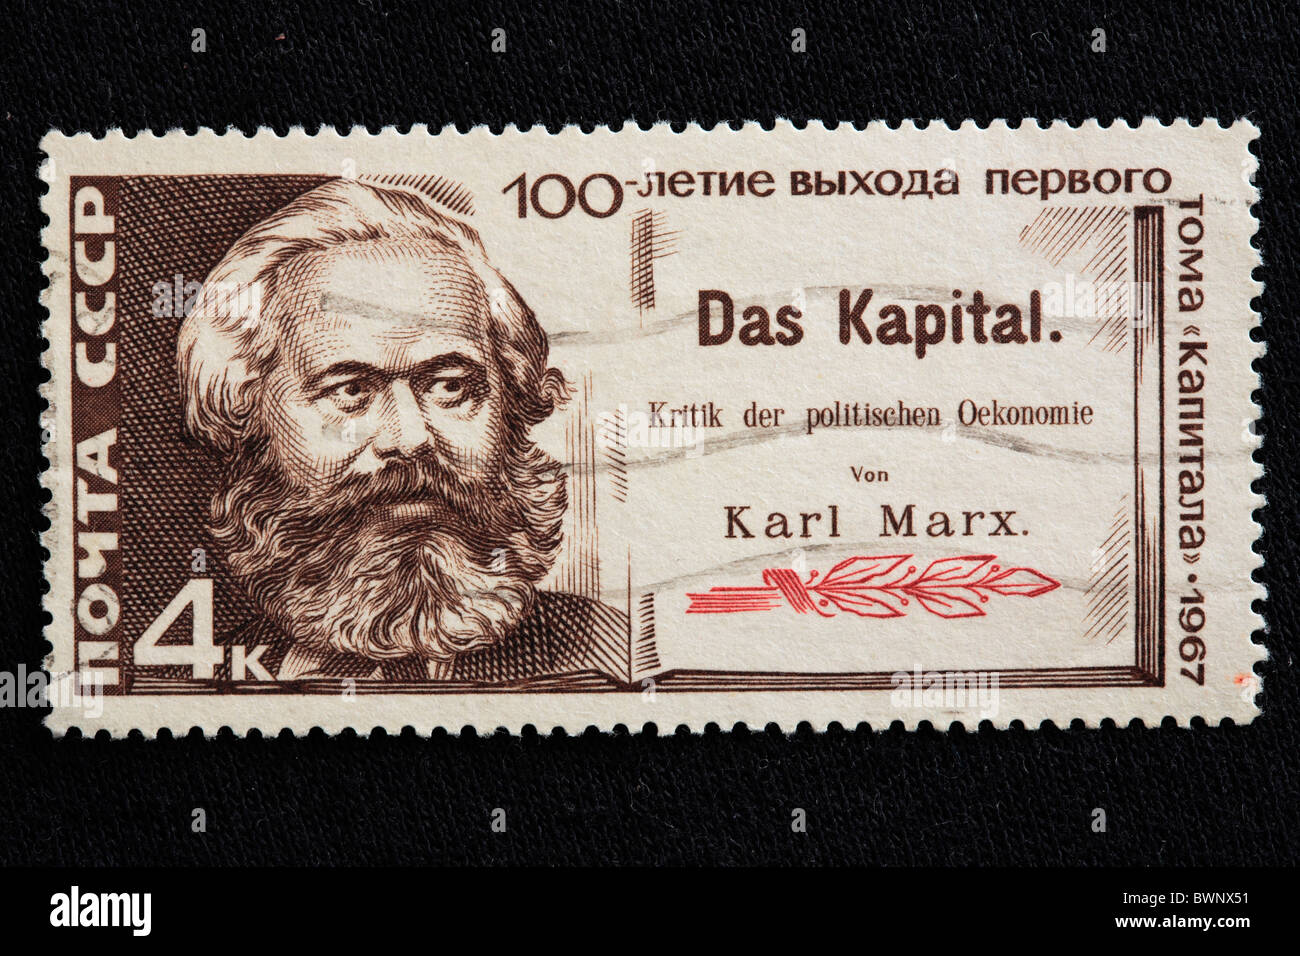 Centenary of Das Kapital Karl Marx Engraving USSR Soviet Union Russia Russian socialism socialist communism Stock Photo